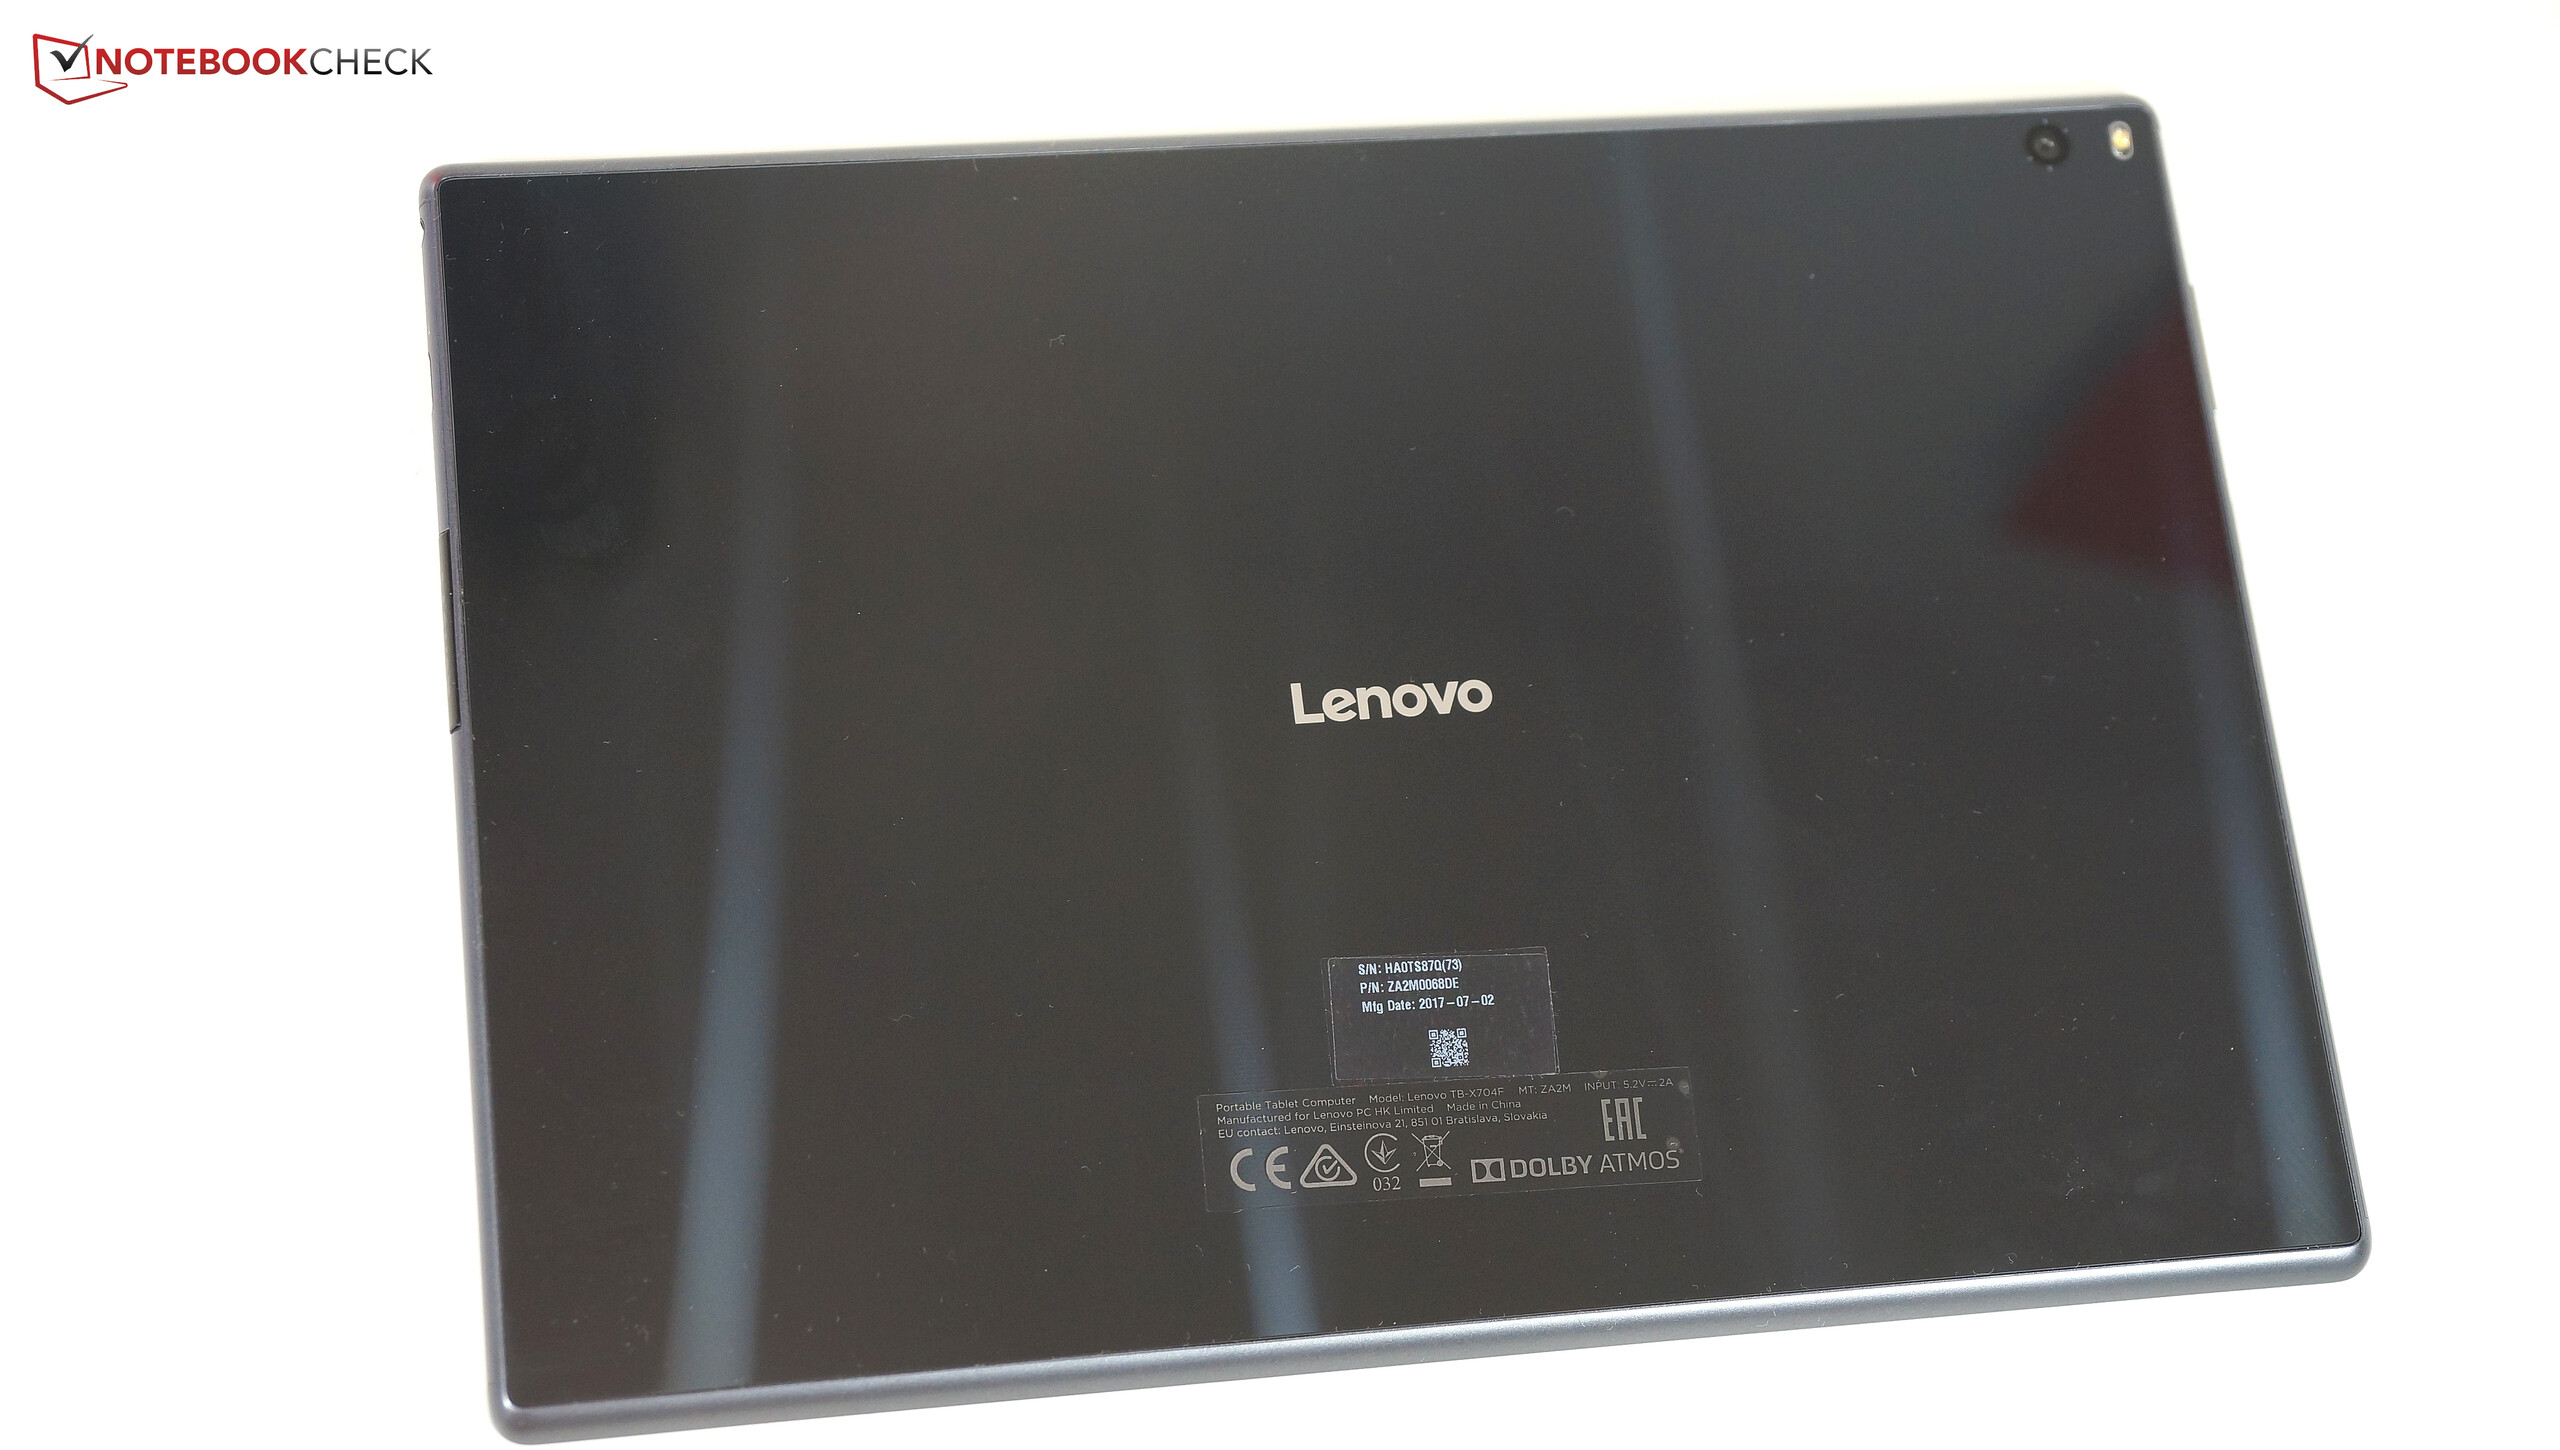 Lenovo 4 10 Plus Tablet - NotebookCheck.net Reviews